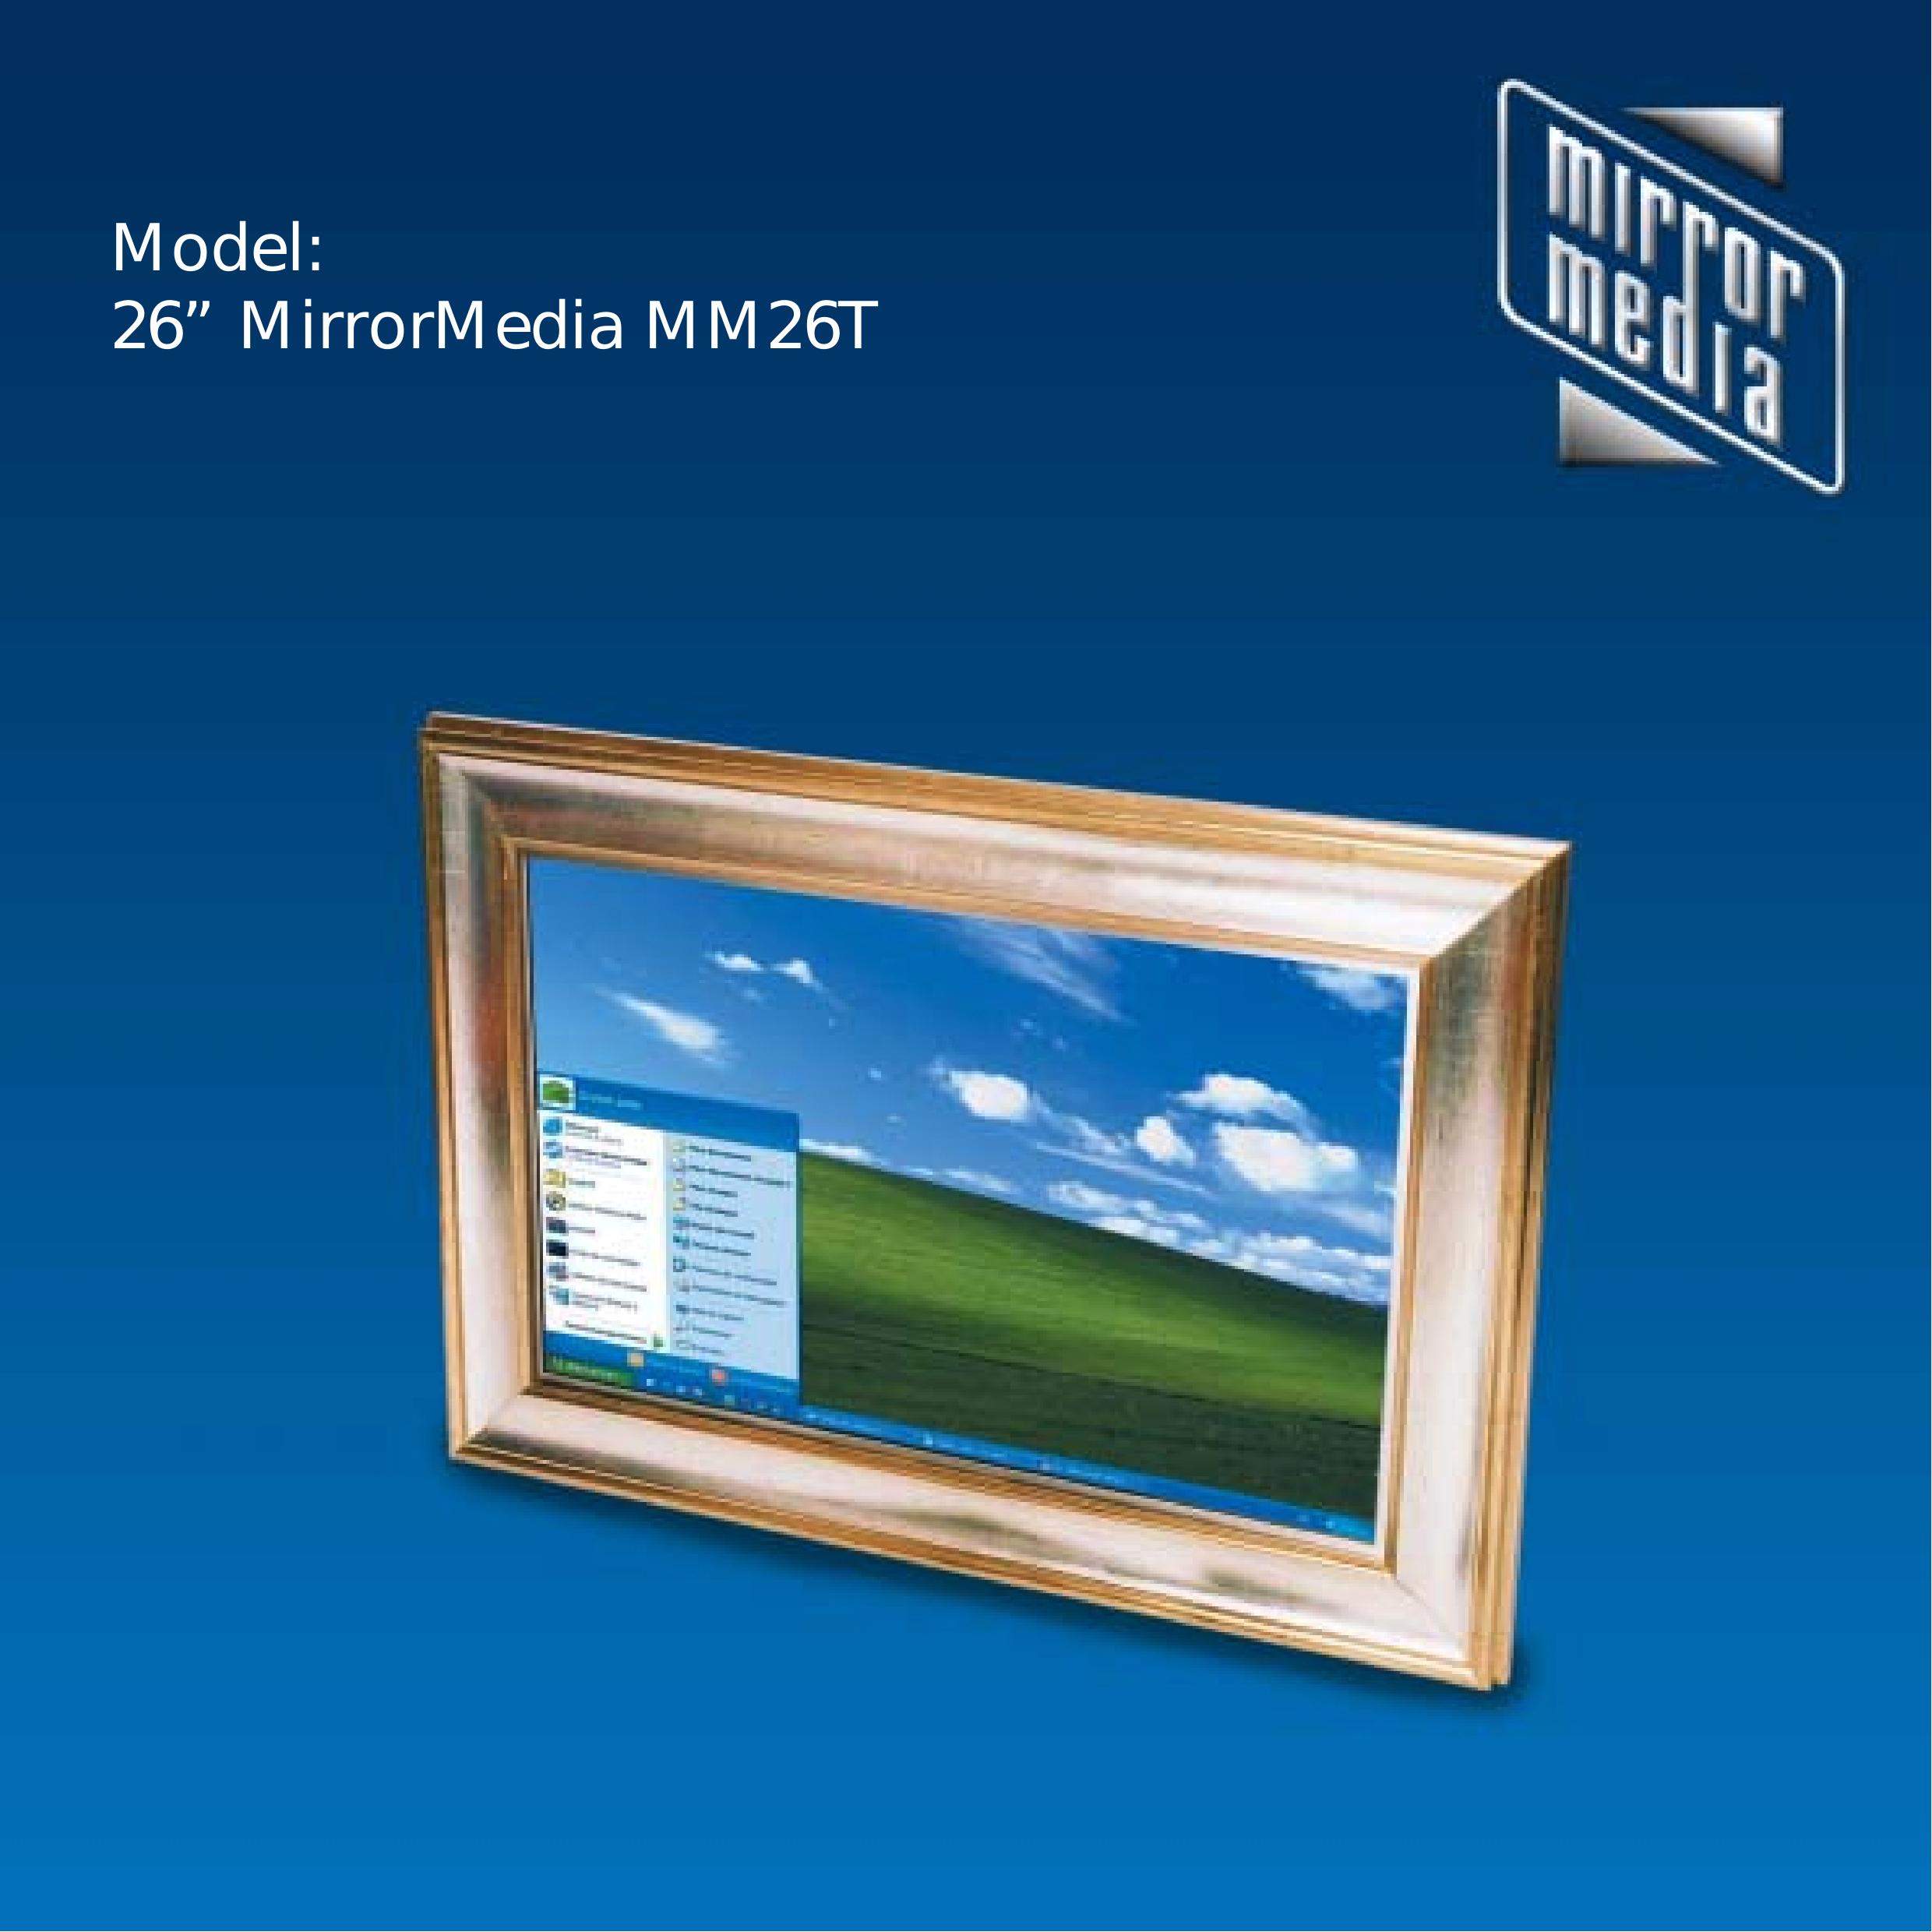 Mirror Media MM26T Digital Photo Frame User Manual